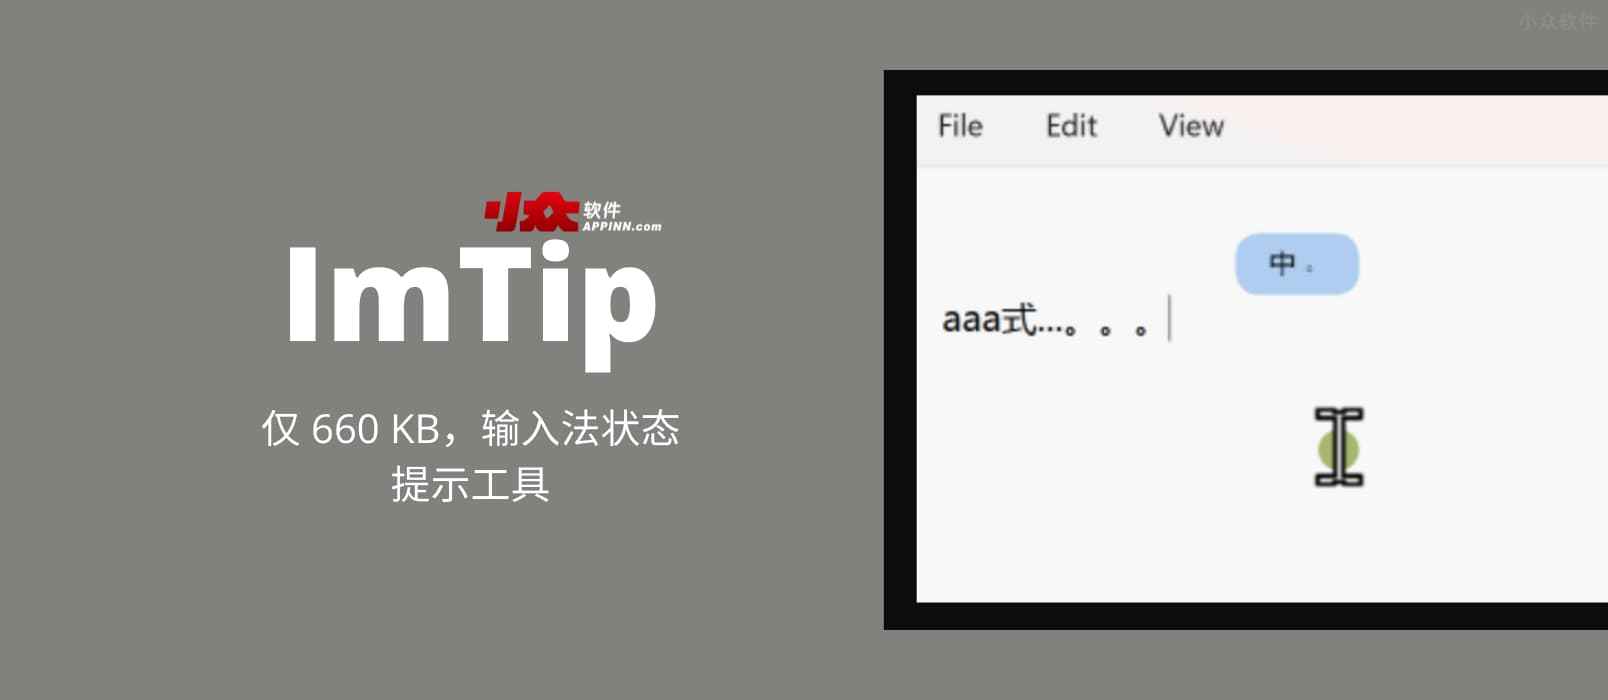 ImTip - 仅 660 KB，输入法状态提示工具[Windows]